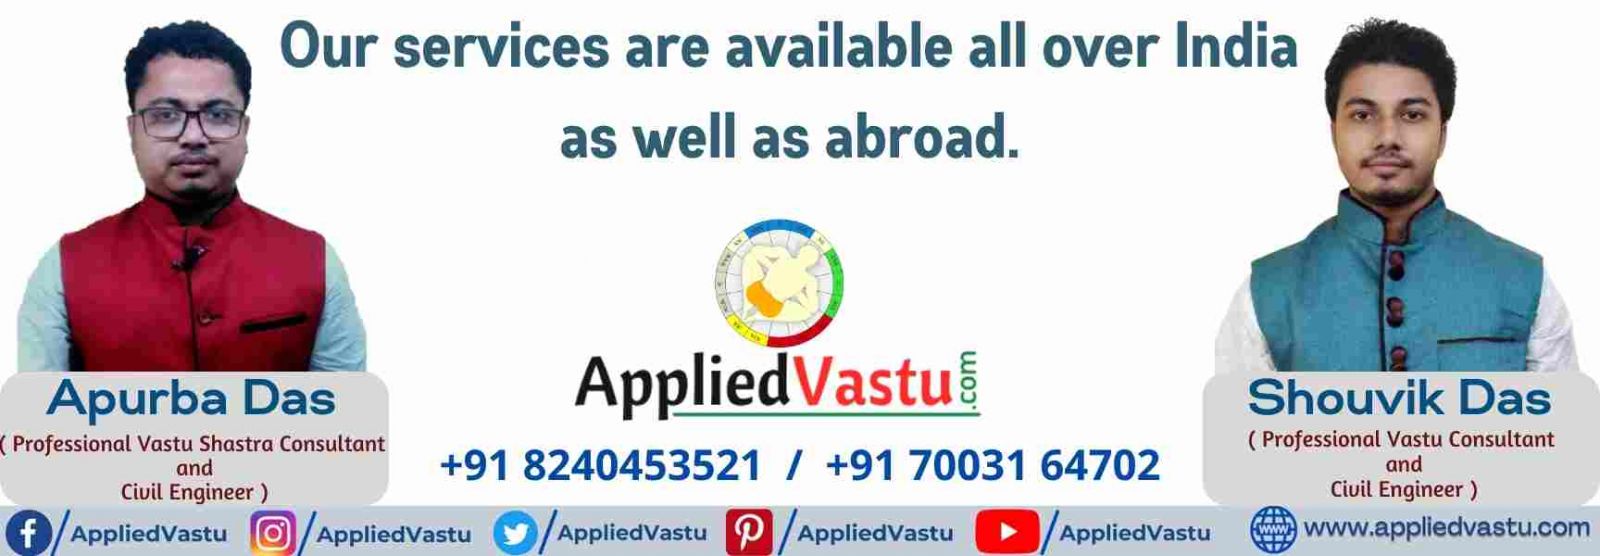 Contact Us - AppliedVastu™